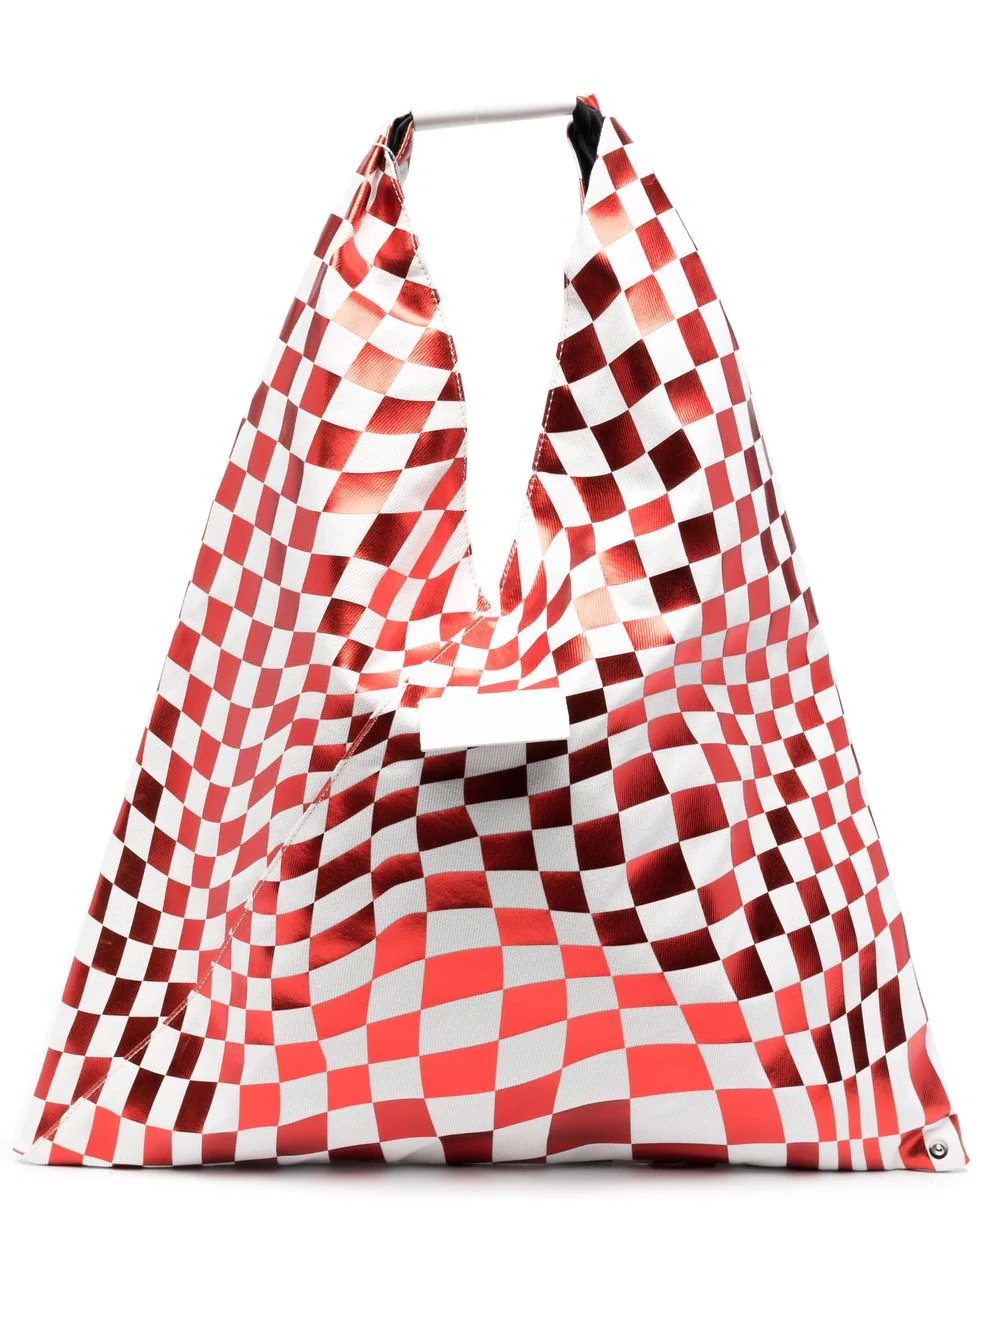 MM6 Maison Margiela
illusional-print tote bag